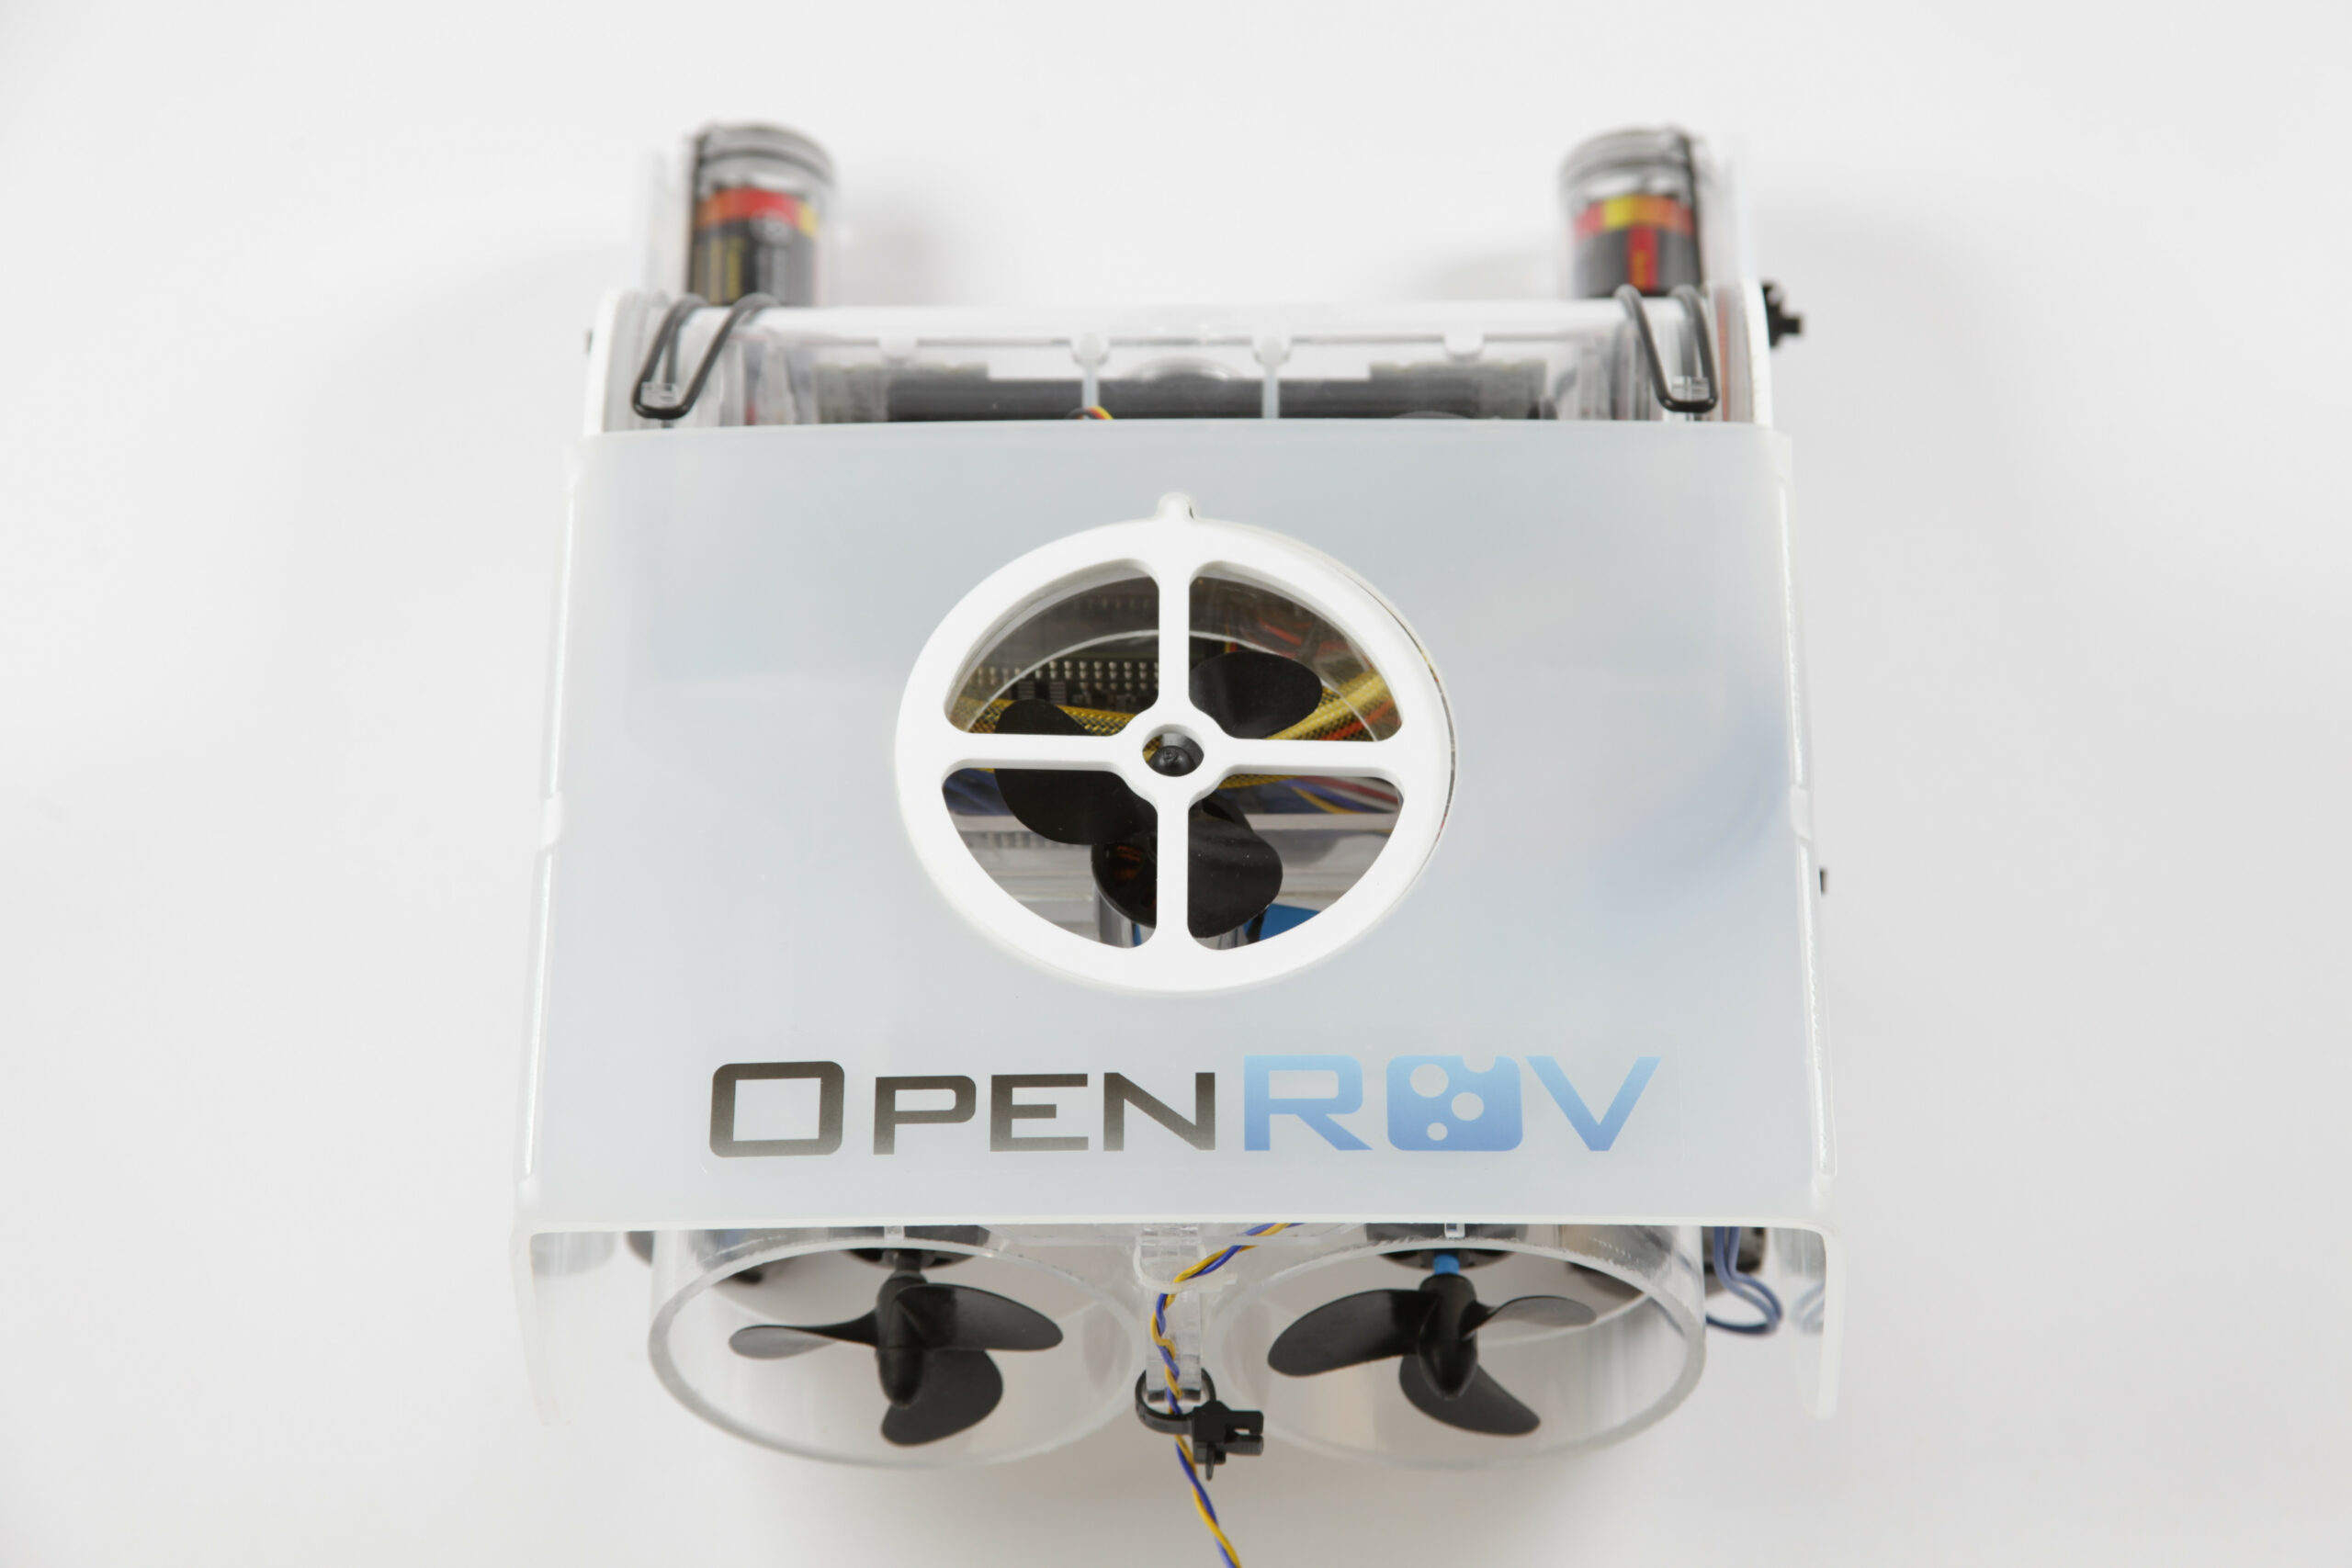 BeagleBone Black project spotlight: OpenROV